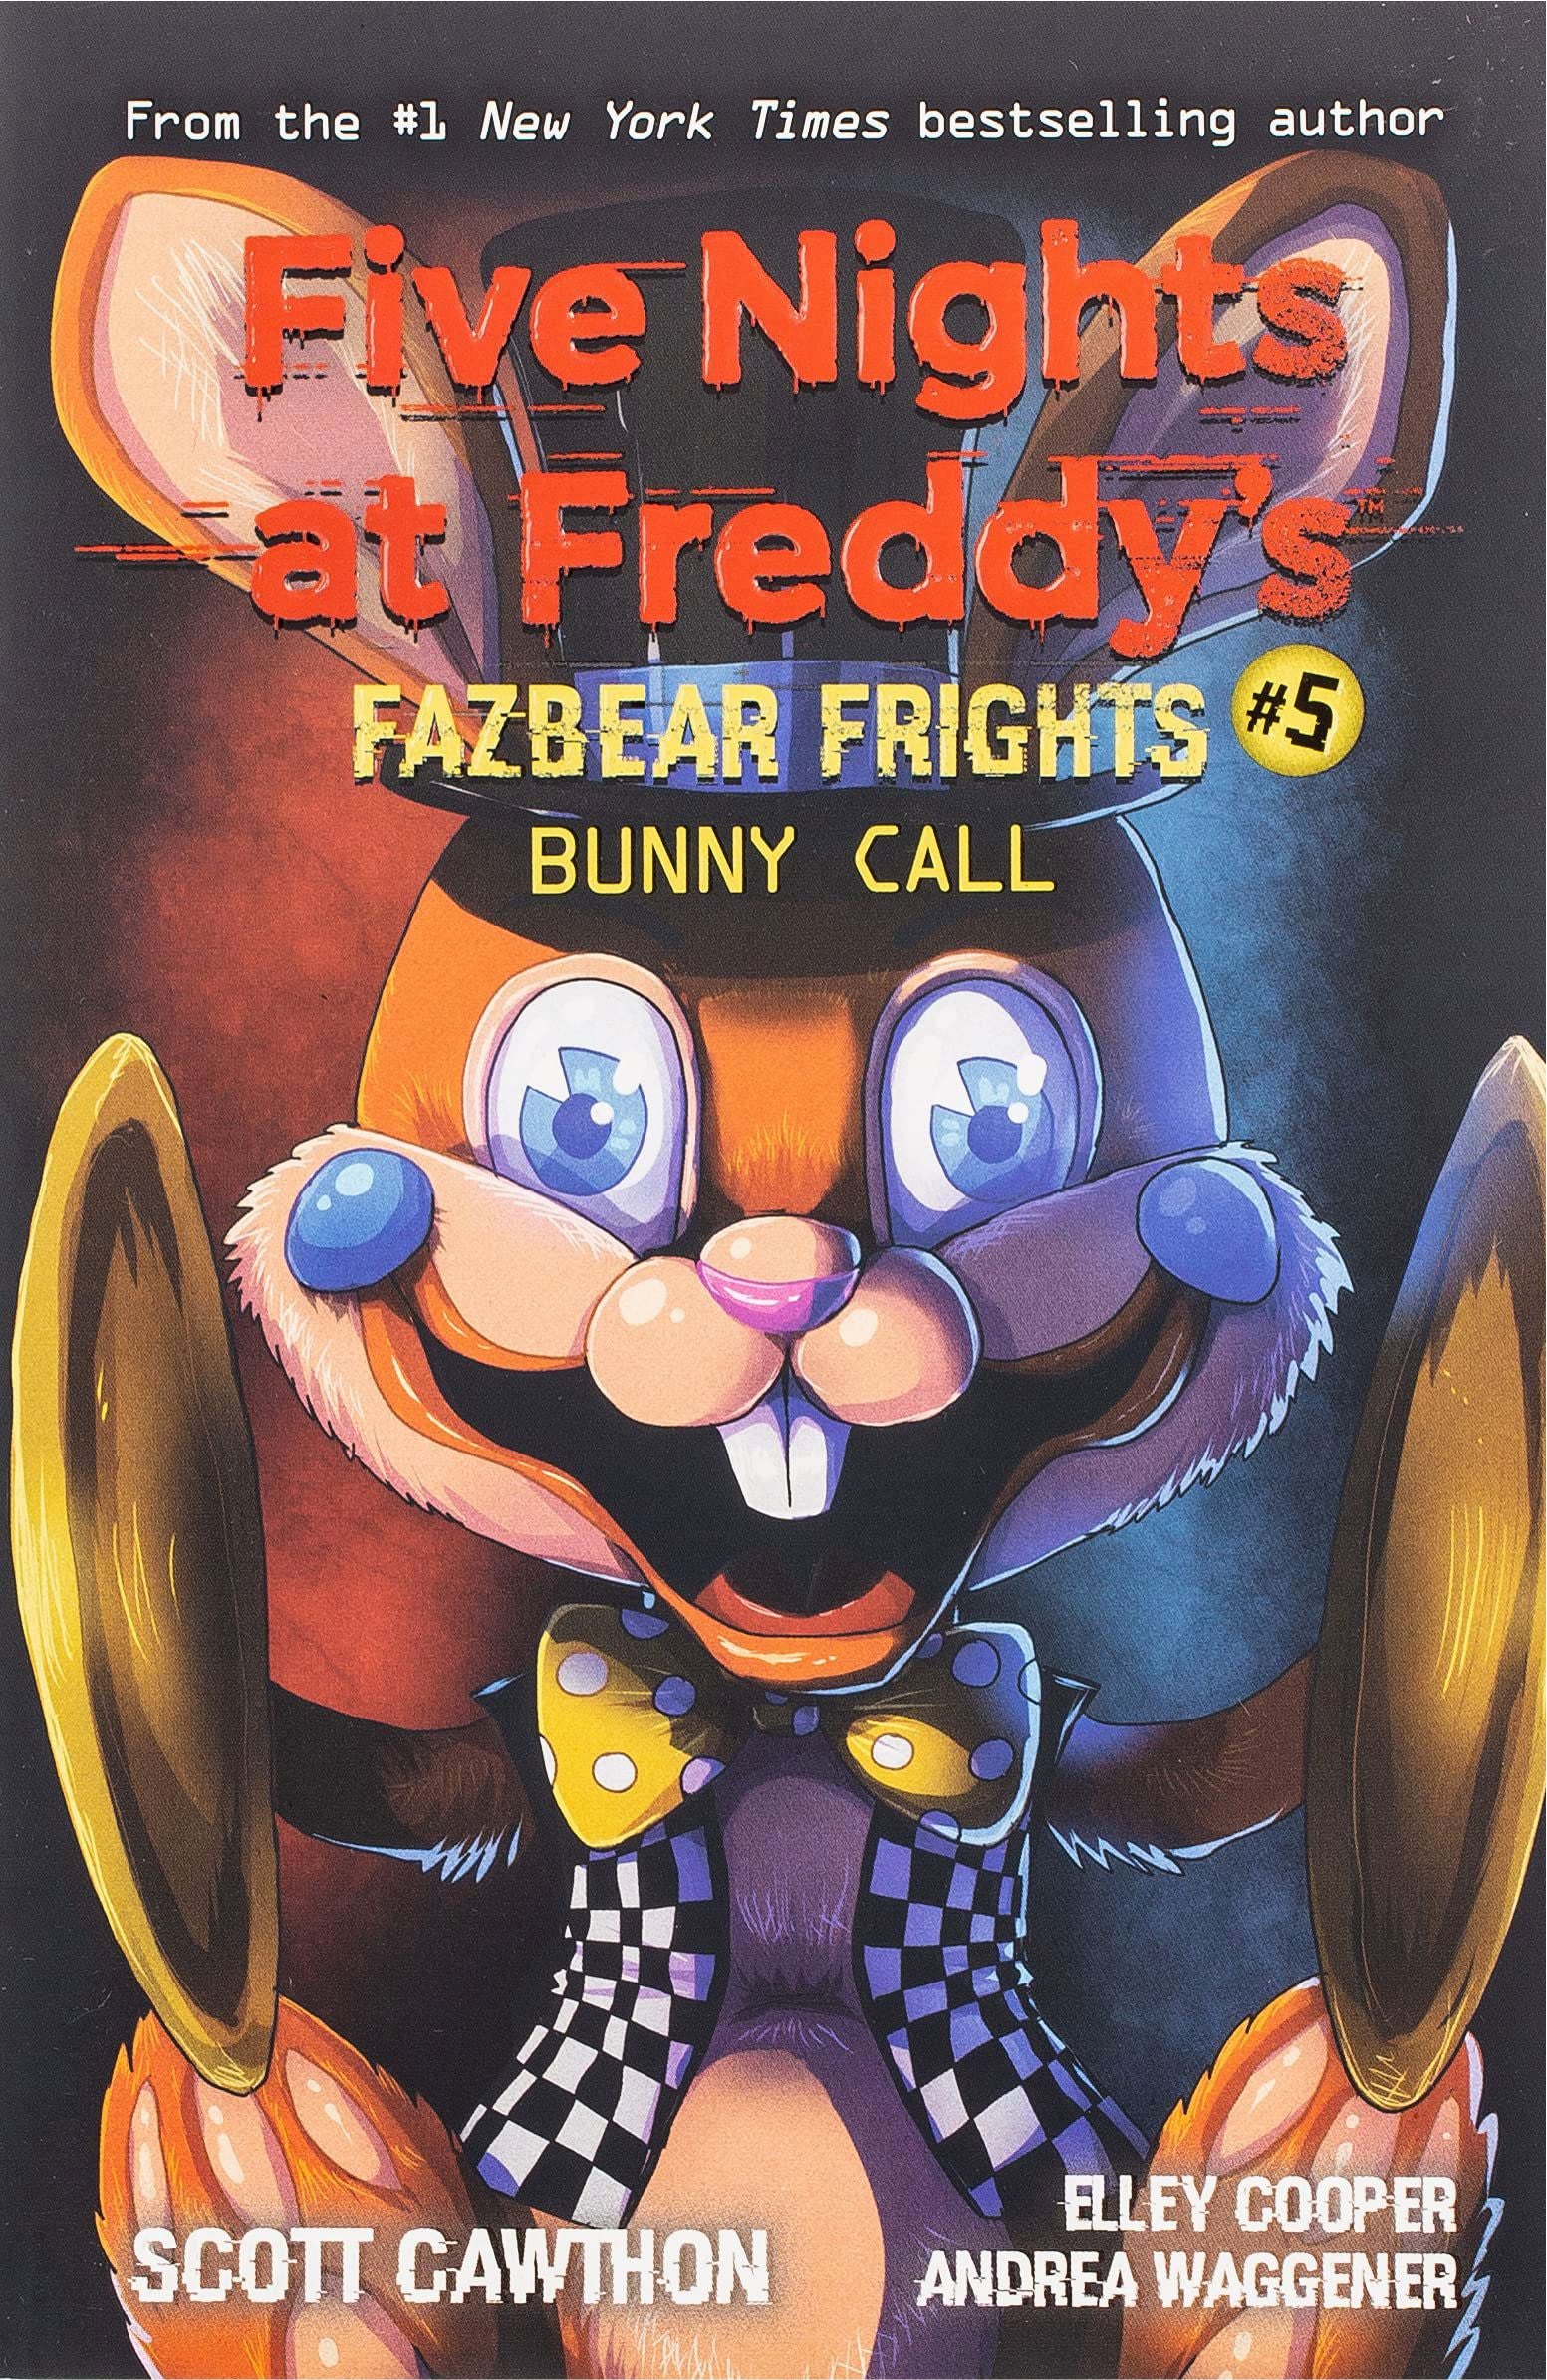 Five Nights at Freddy's #5 : Fazbear Frights - Bunny Call